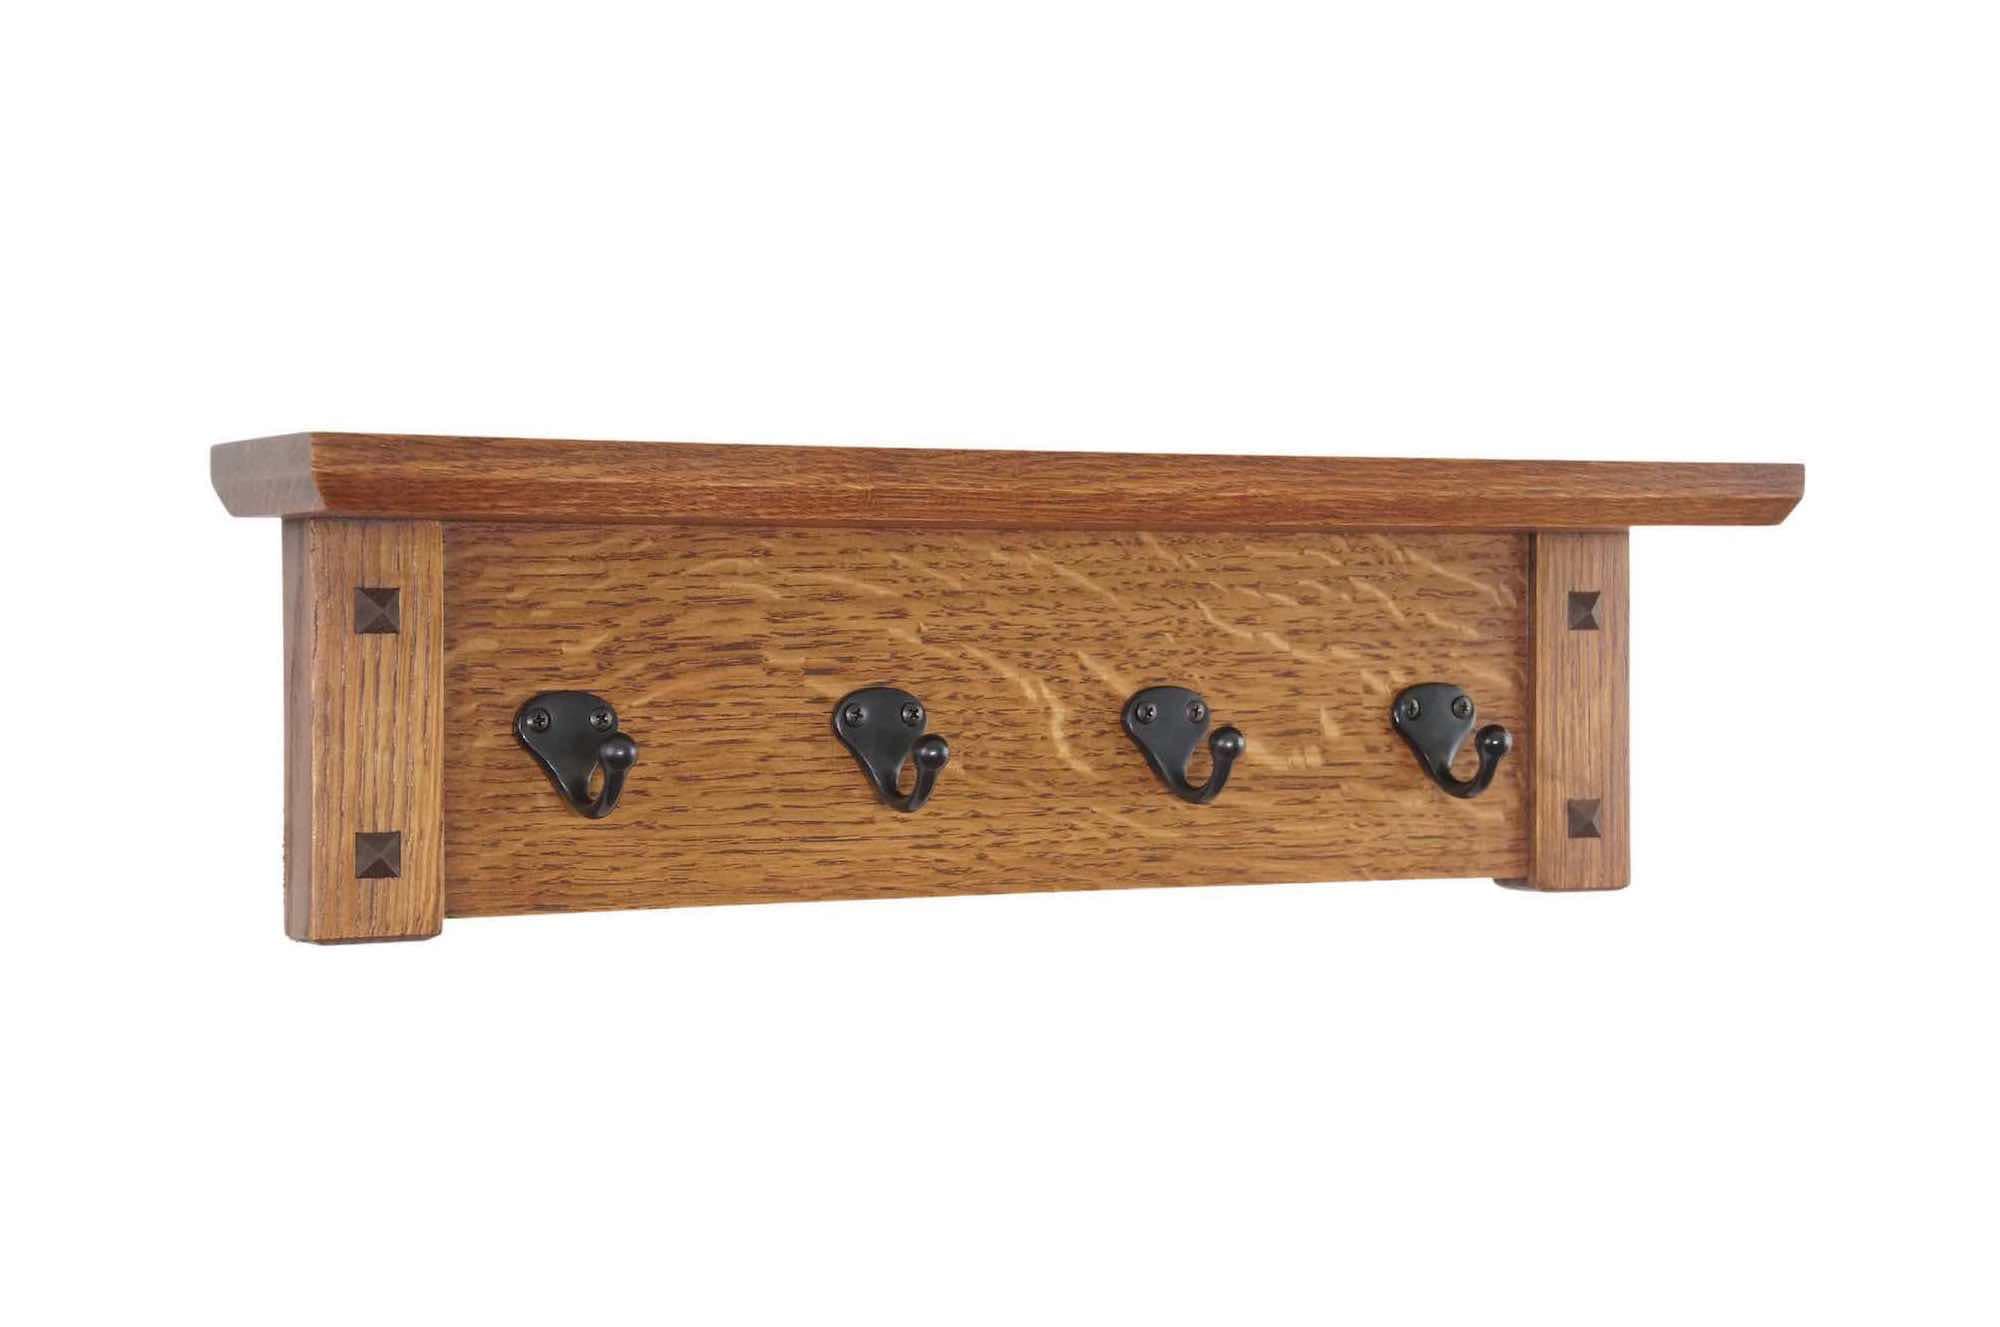 Rustic Key Rack. Barn Wood Shelf With Key Hooks. Rustic Key Hanger.  Reclaimed Wall Hooks. Rustic Shelf With Pegs. 